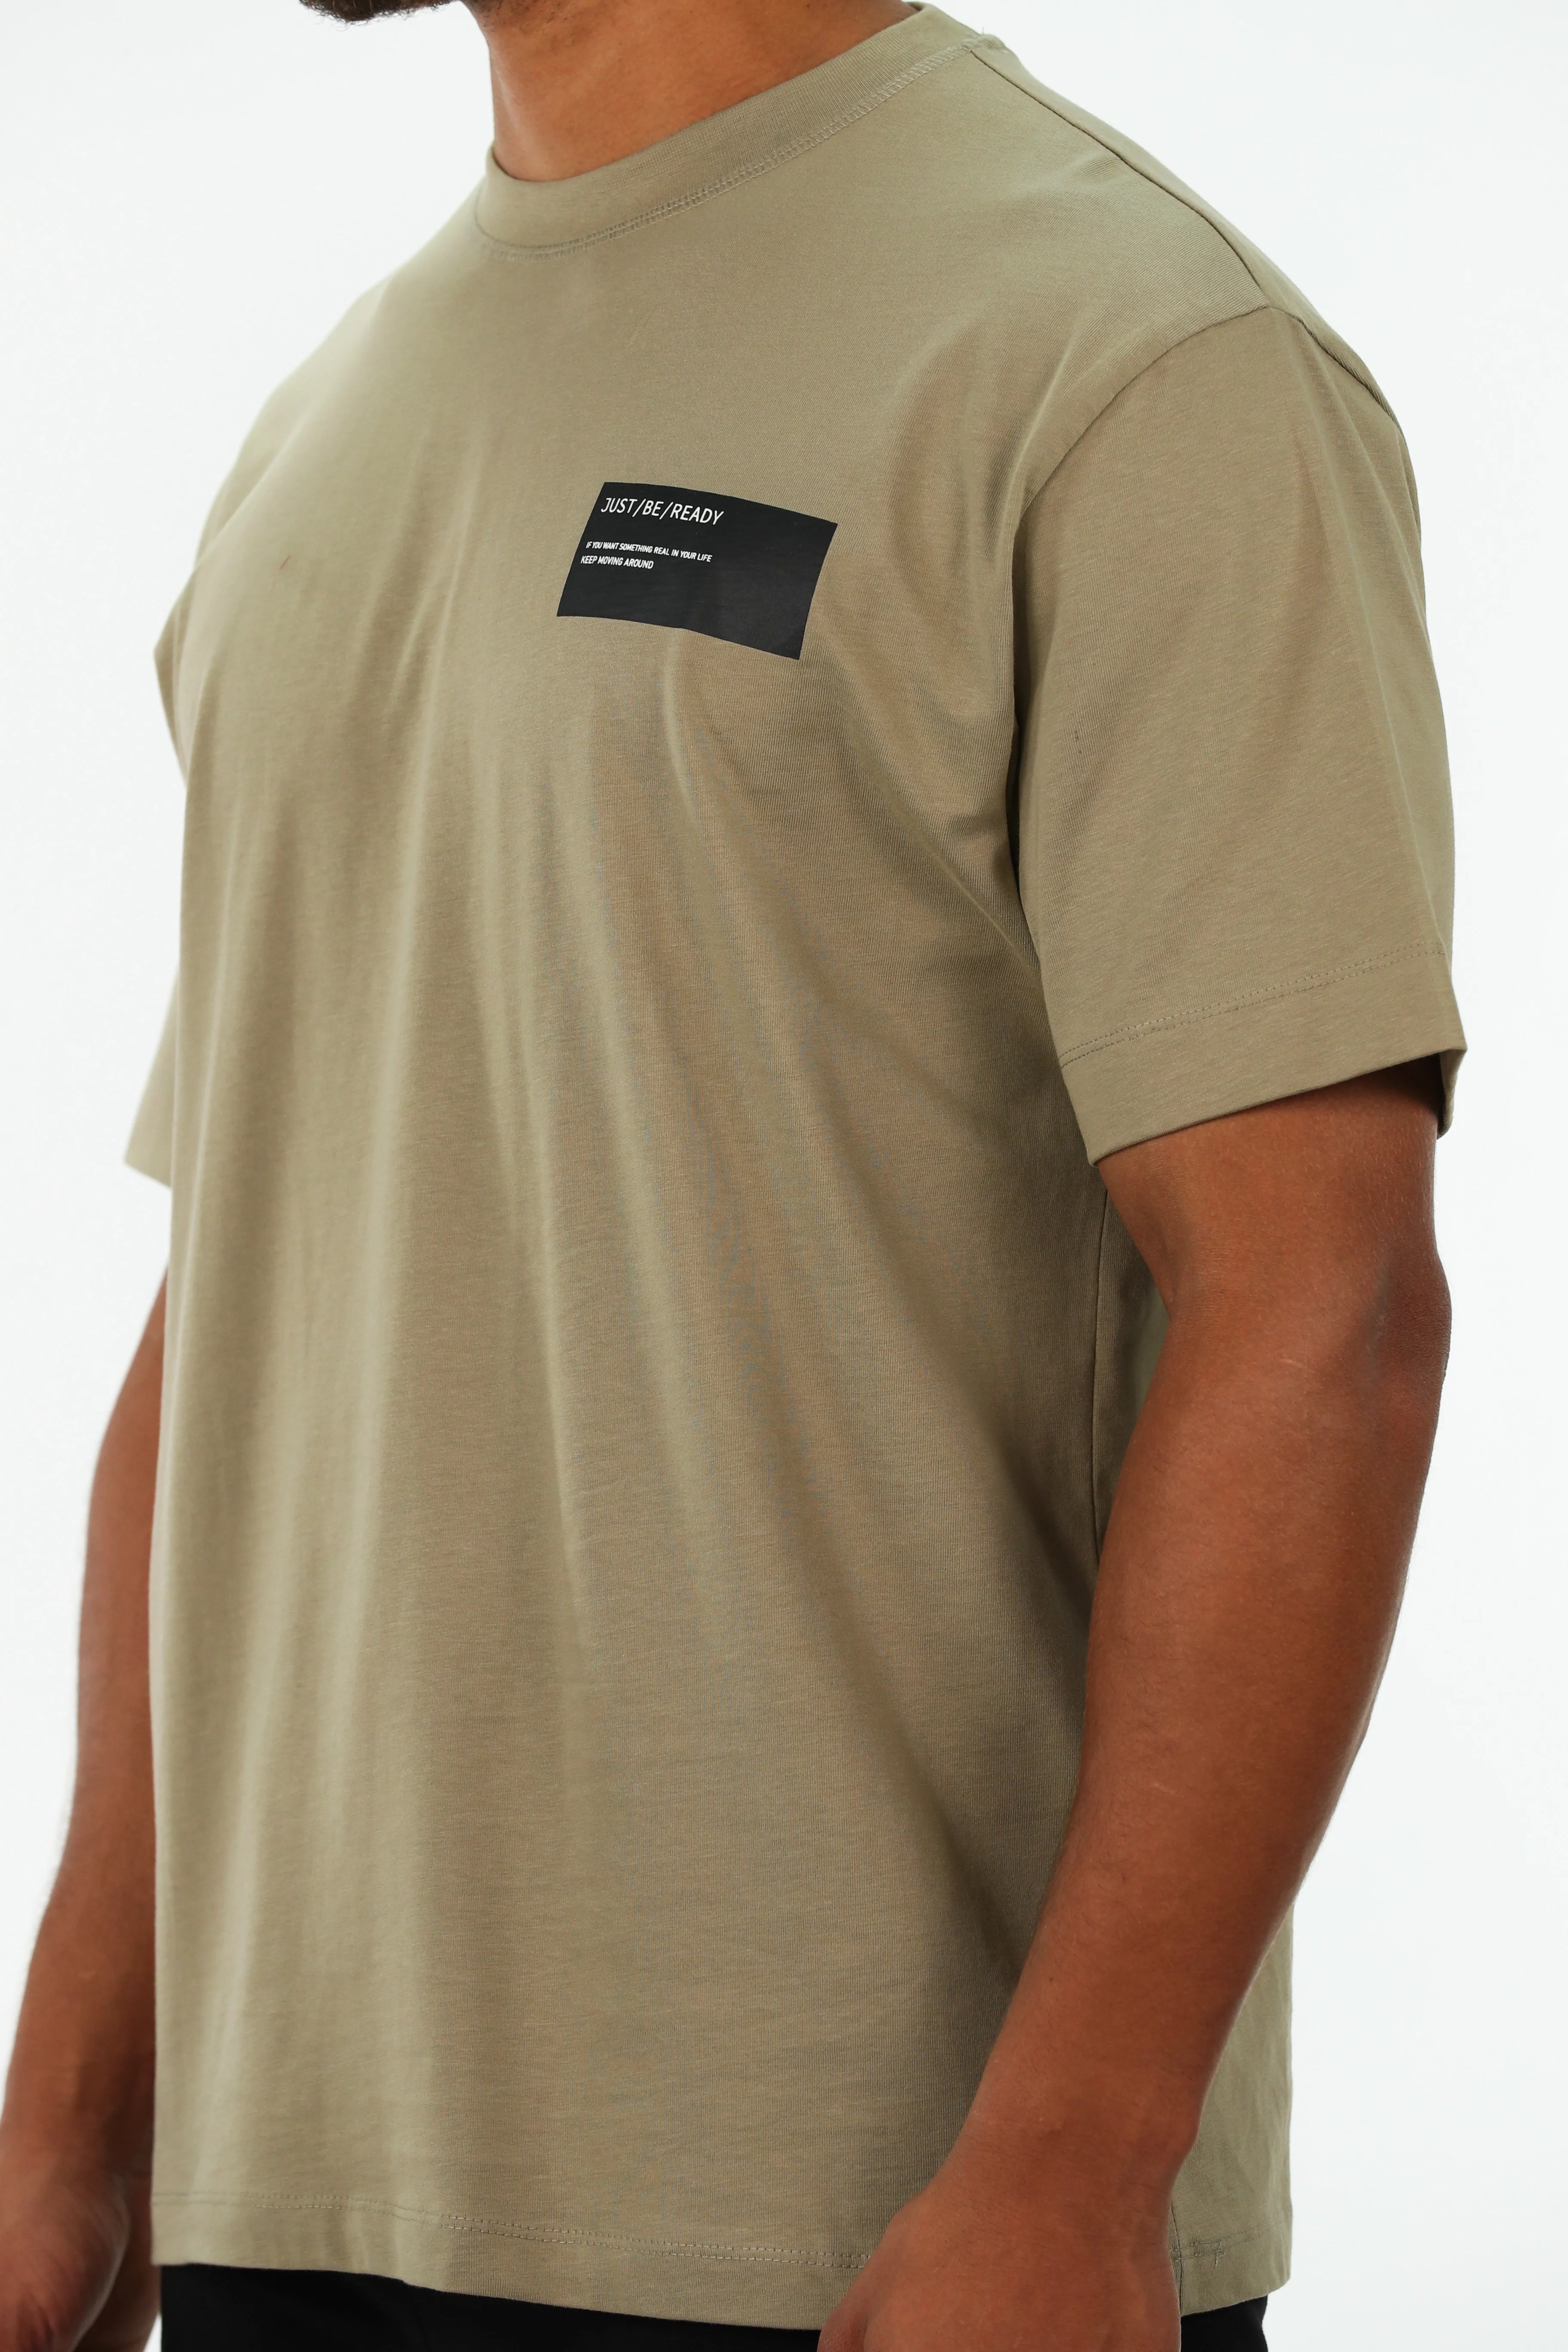 Oversized Light Khaki T-shirt With Simple Design